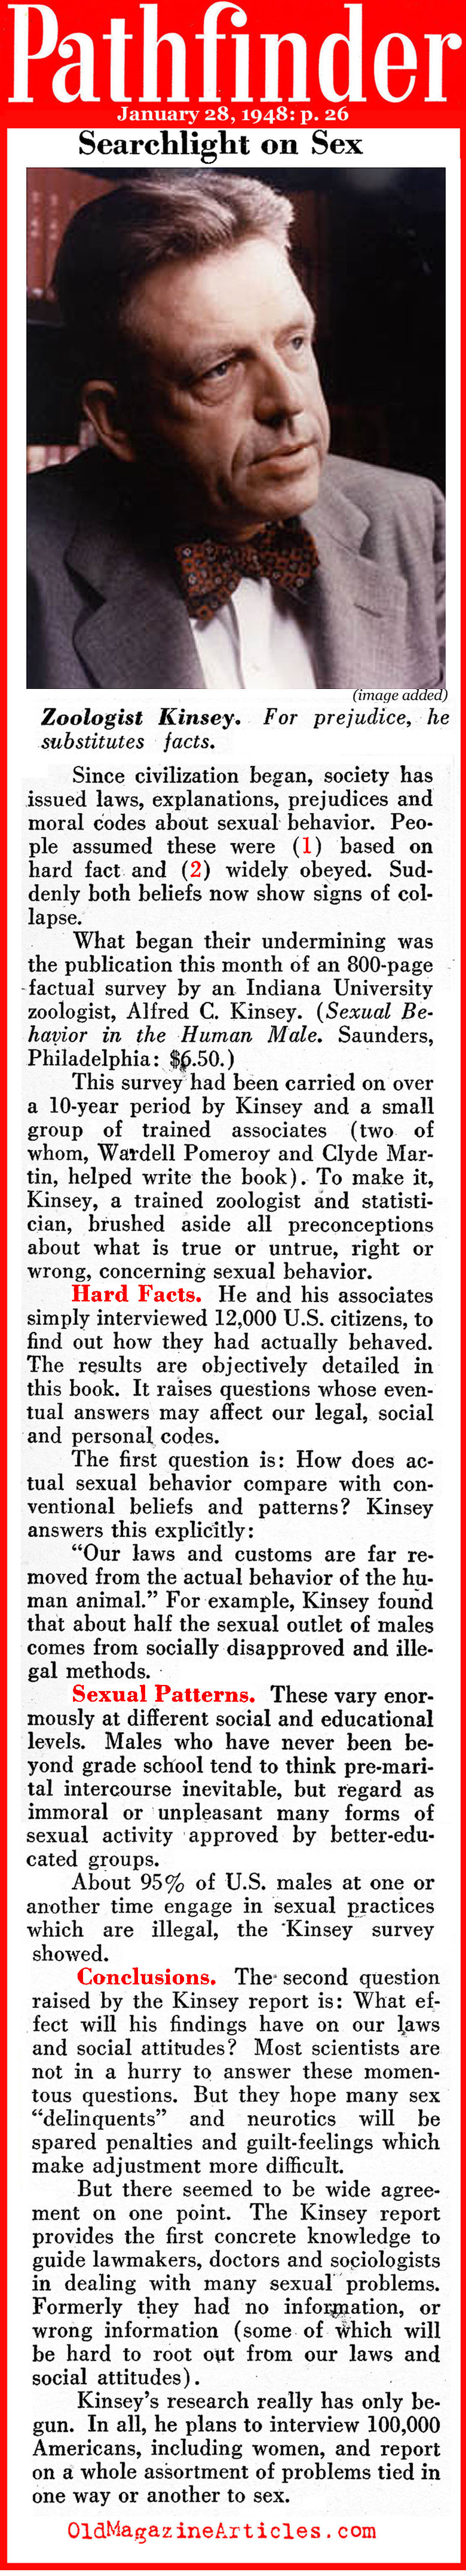 Mr. Kinsey's Report (Pathfinder Magazine, 1948)